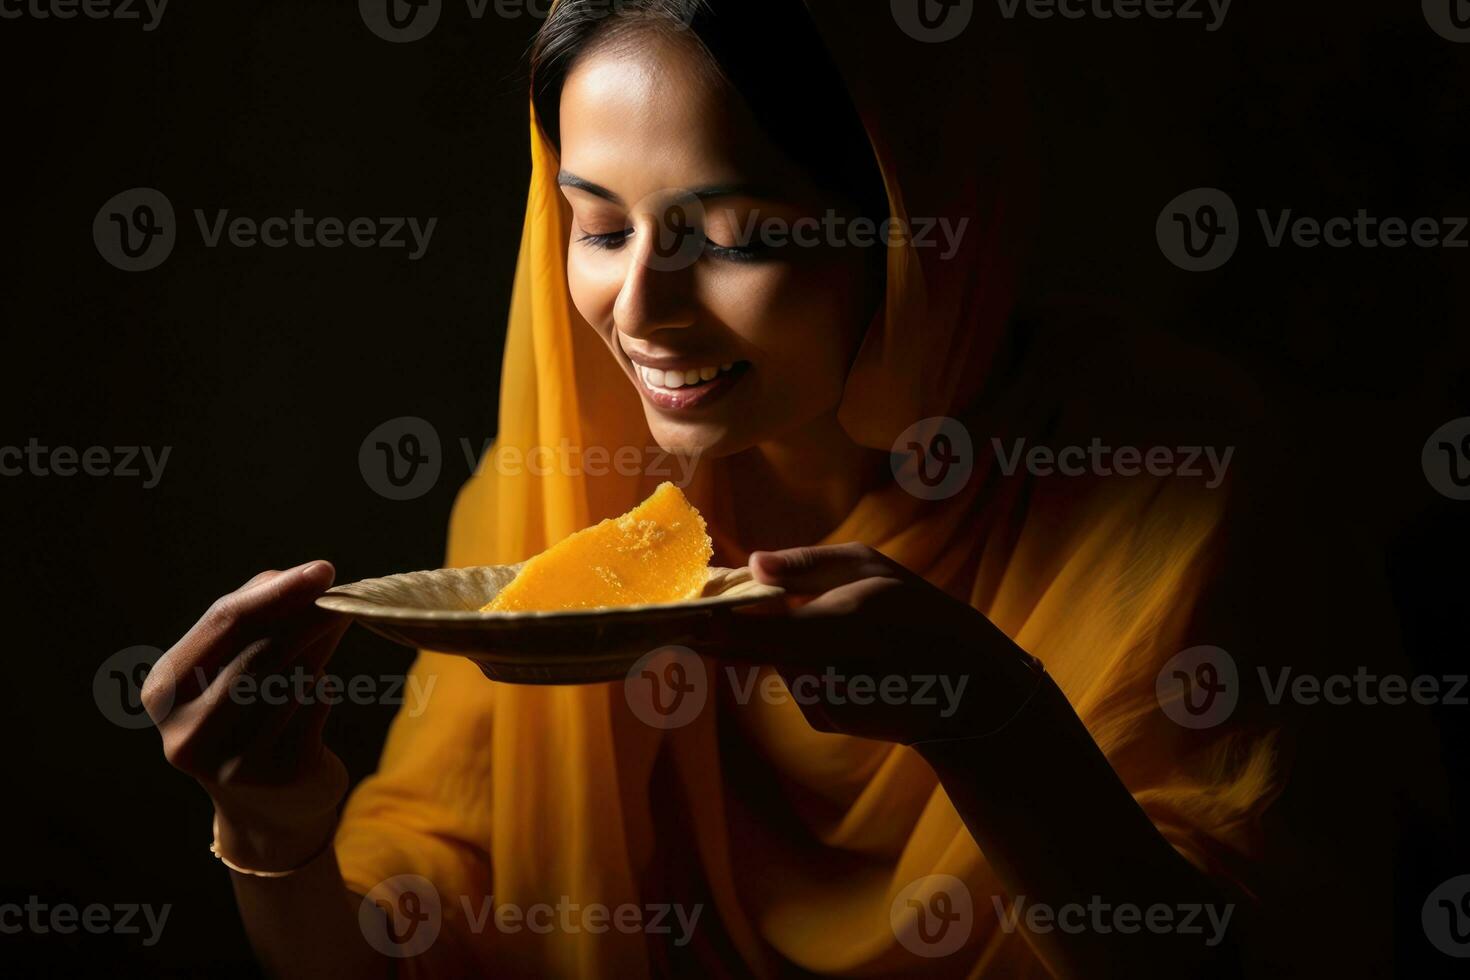 ai genererad en kvinna njuter en skiva av orange i en ljus miljö foto